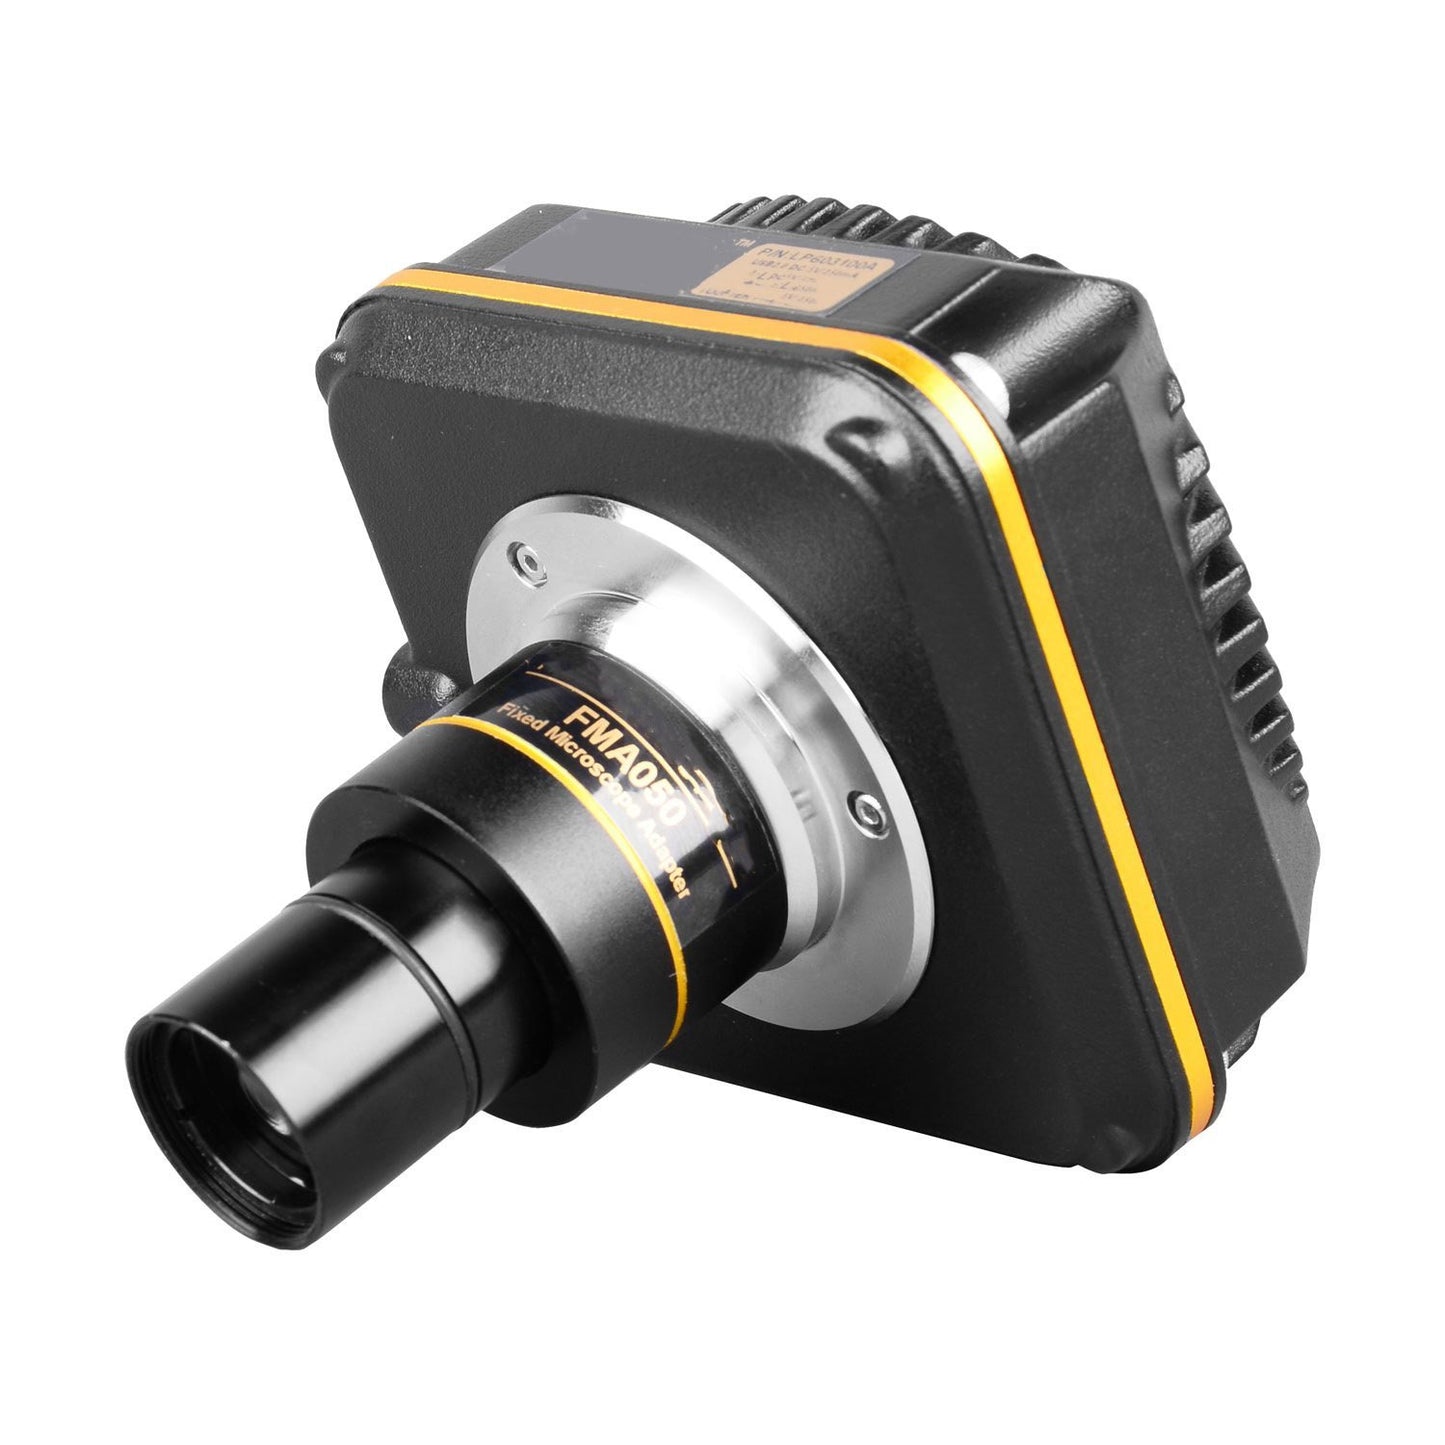 .5MP High-Speed USB 3.0 Digital Microscope Camera